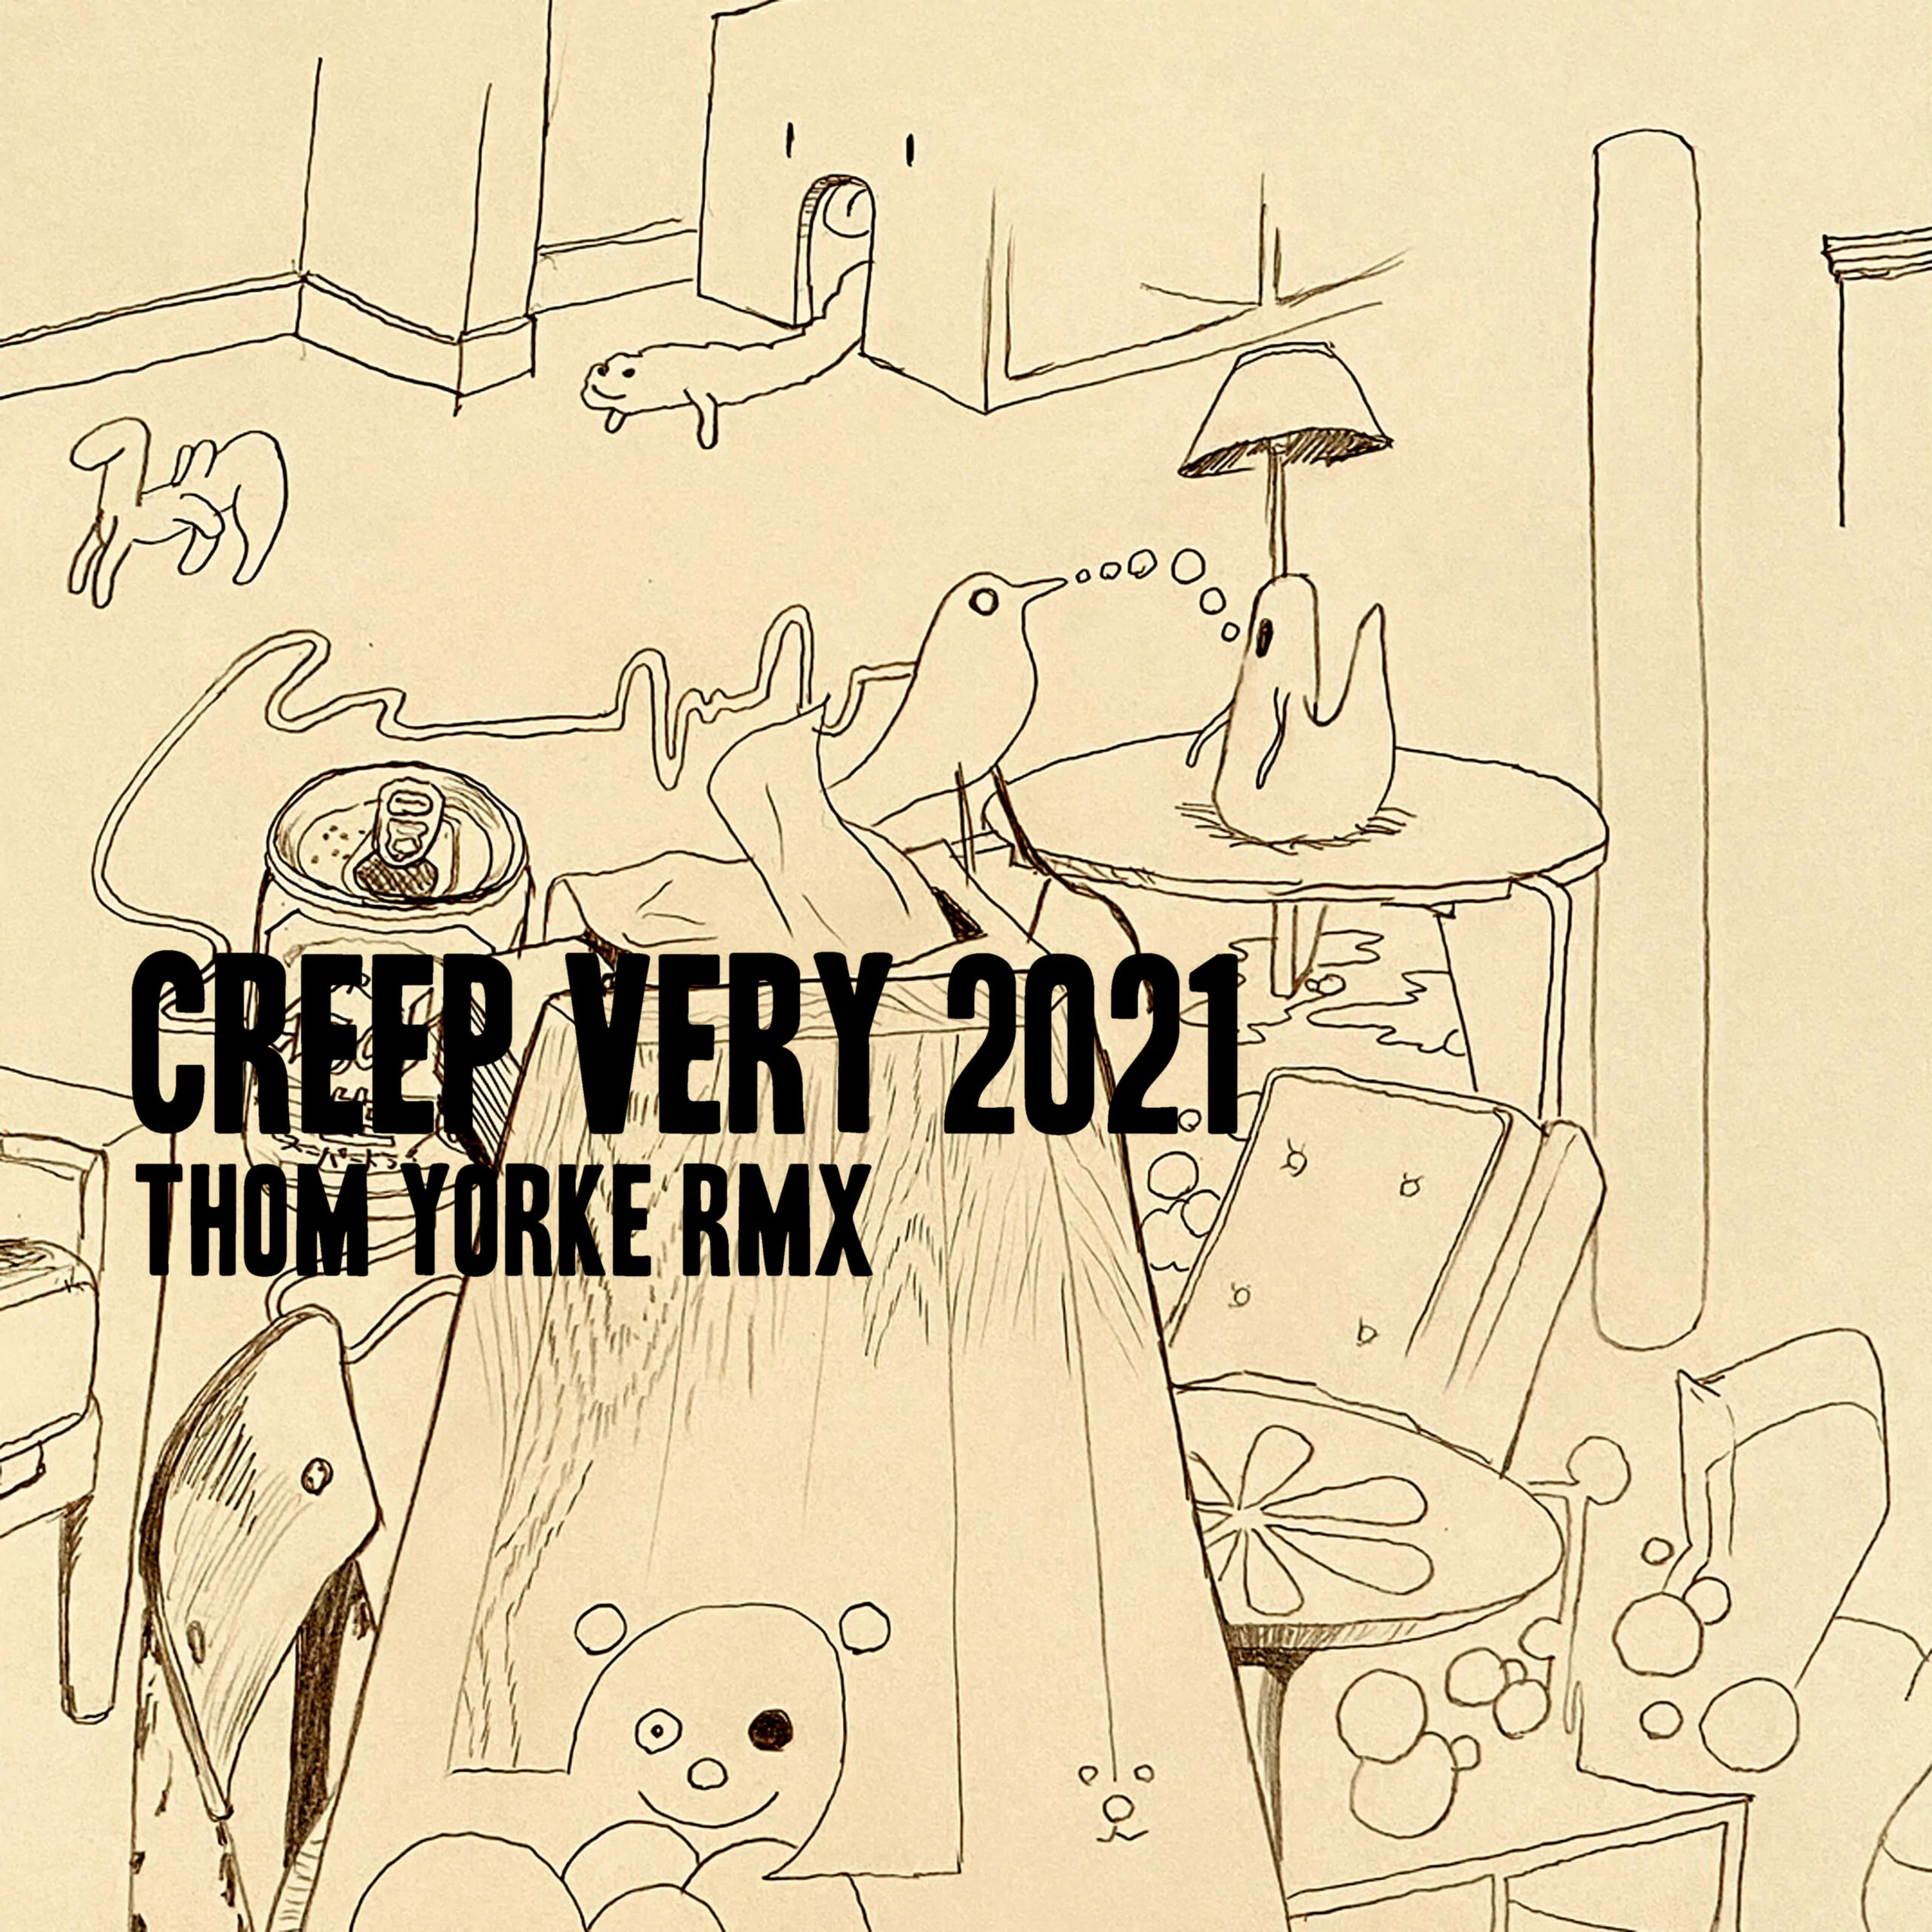 THOM YORKE shares ‘Creep (Very 2021 RMX)’ – Listen Now!